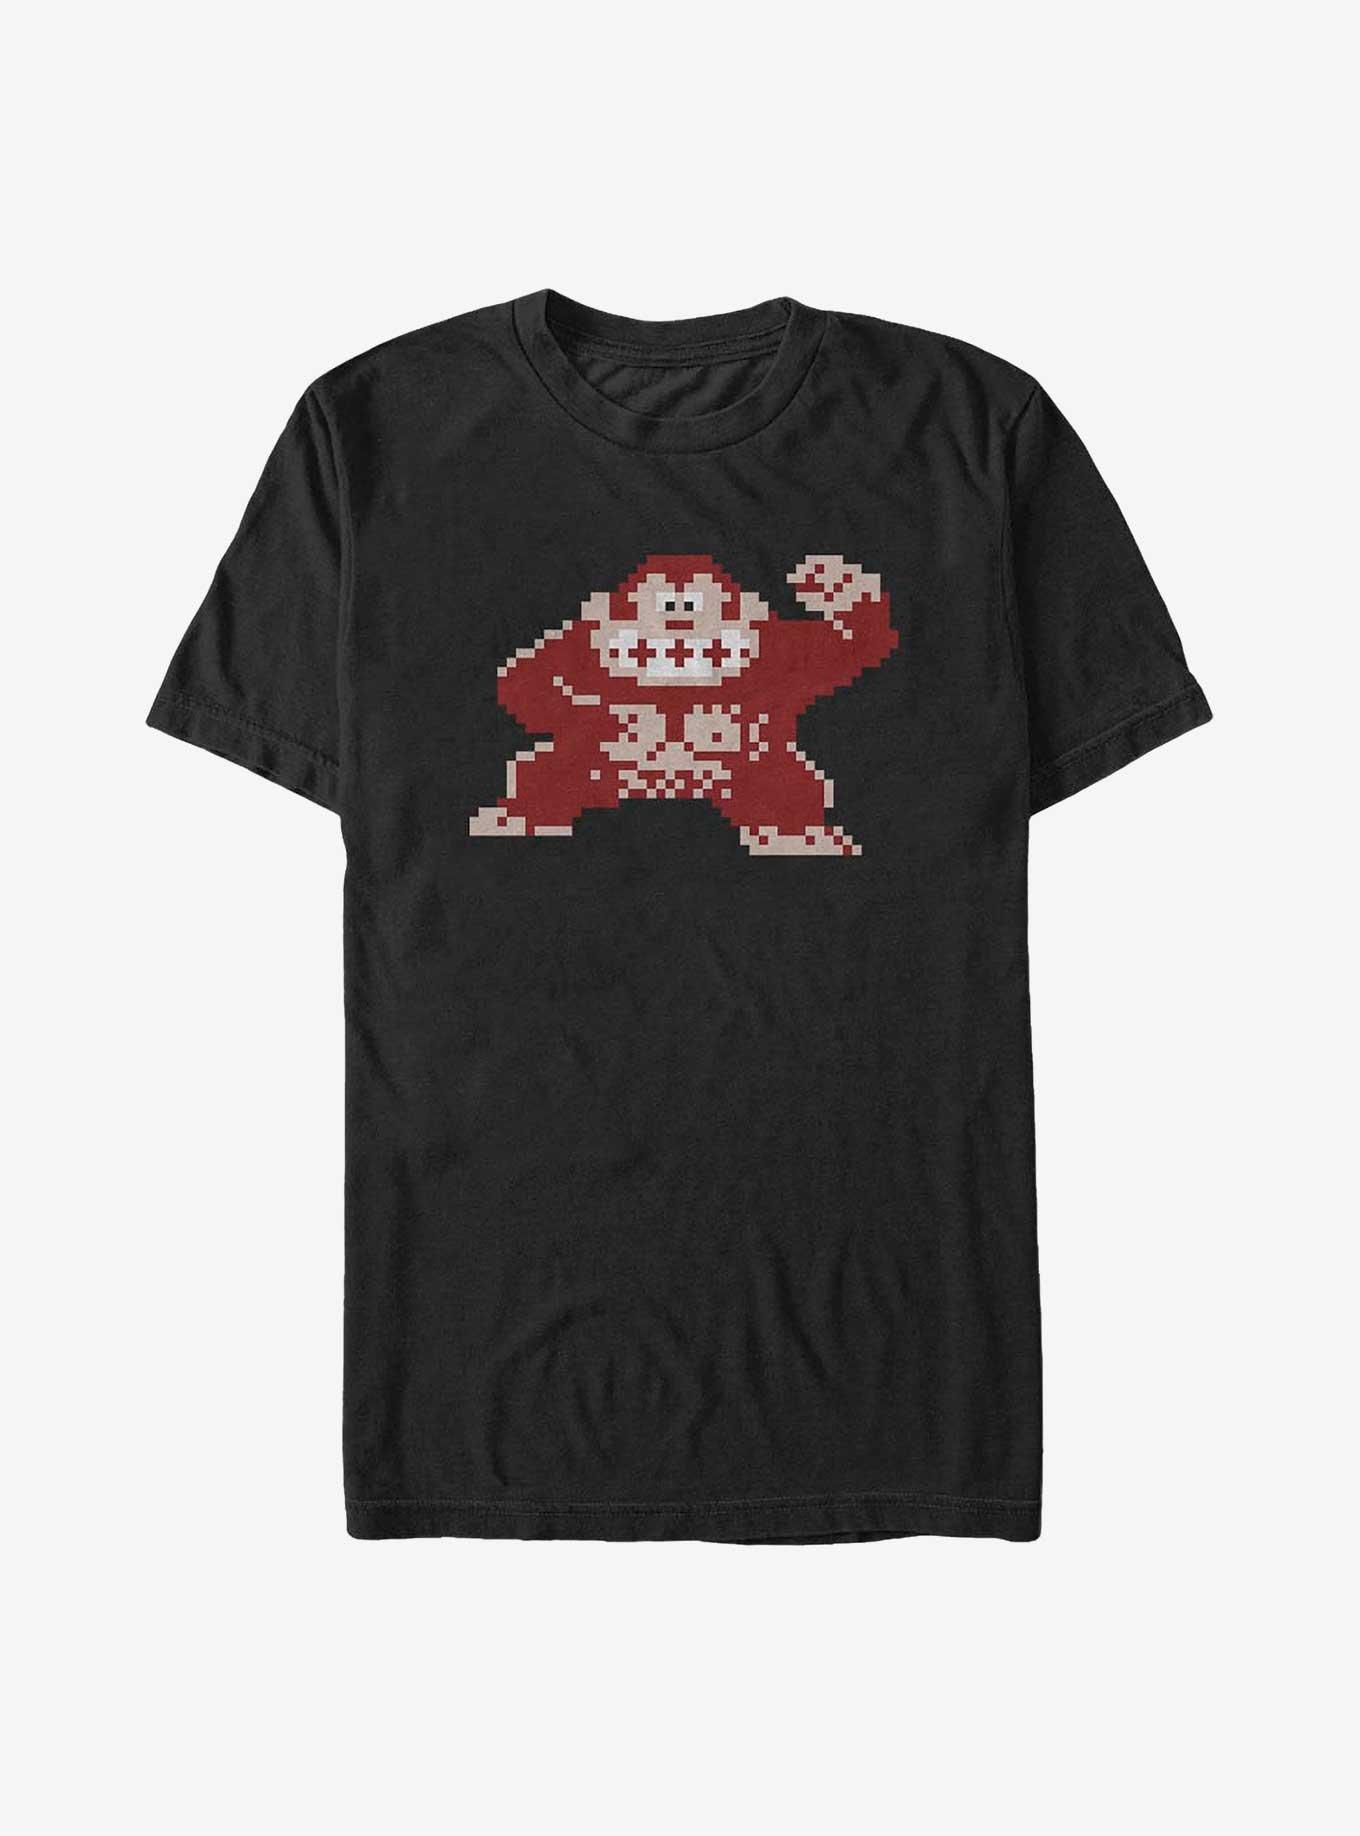 Mario Monkey Business Big & Tall T-Shirt, BLACK, hi-res